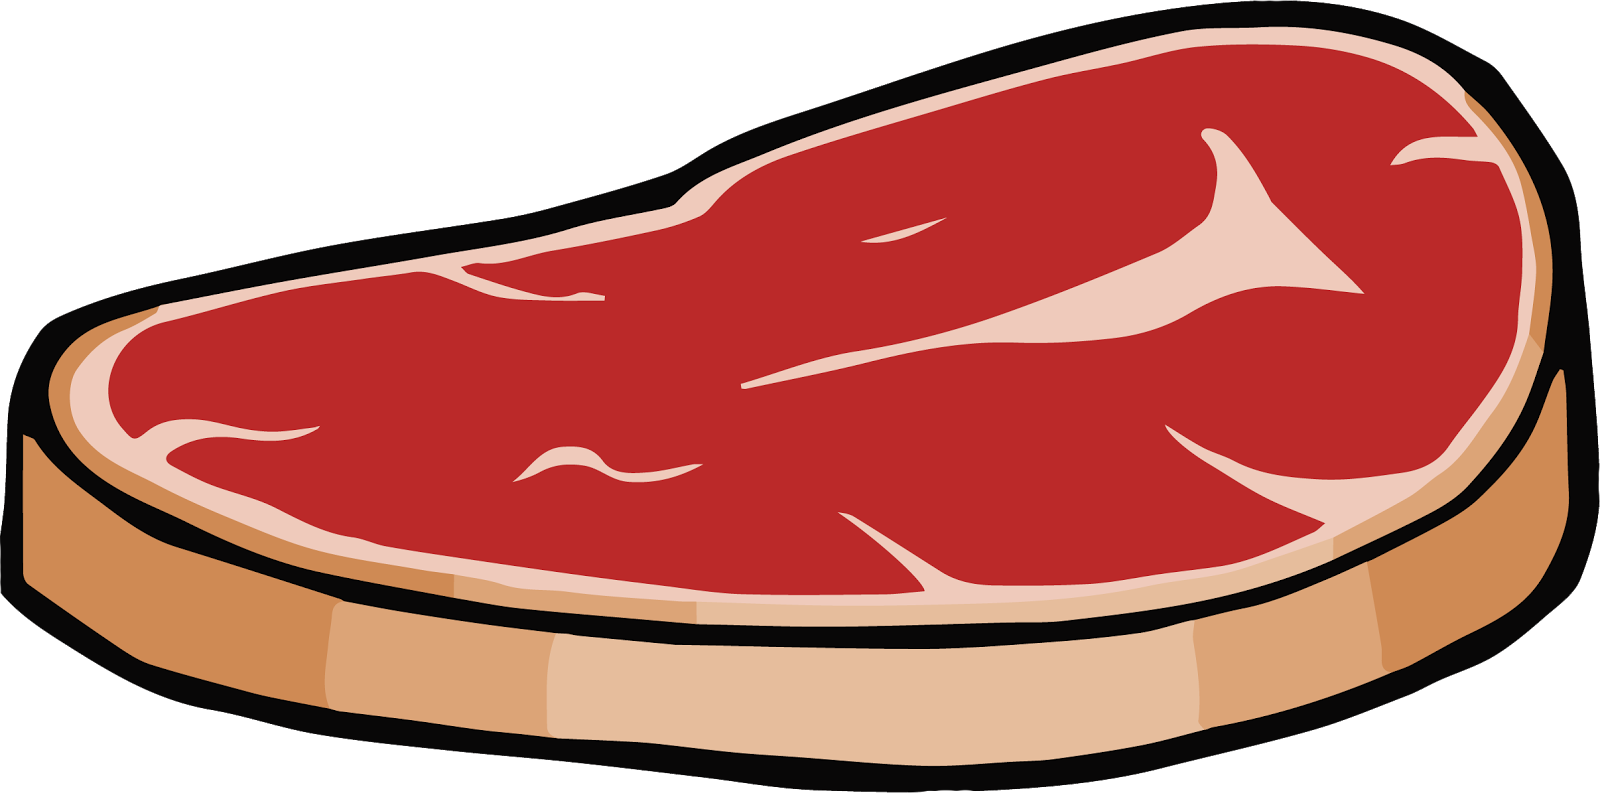 Image grilling steak clip art